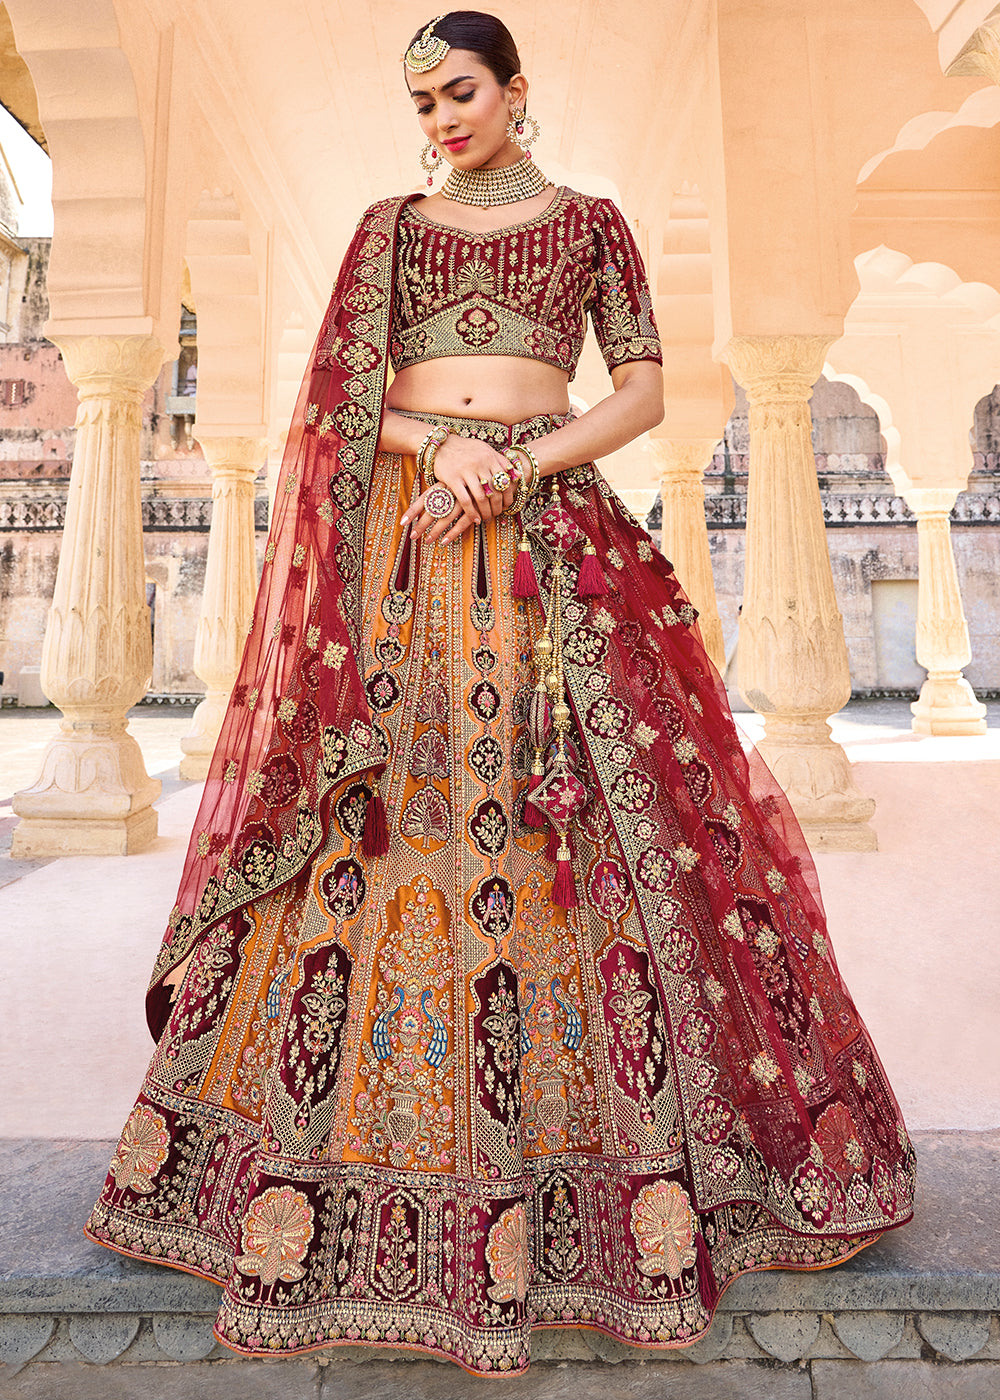 VAMA Designs Bridal Outfits | Designer Lehengas in Bay Area | Shop Now | –  VAMA DESIGNS Indian Bridal Couture